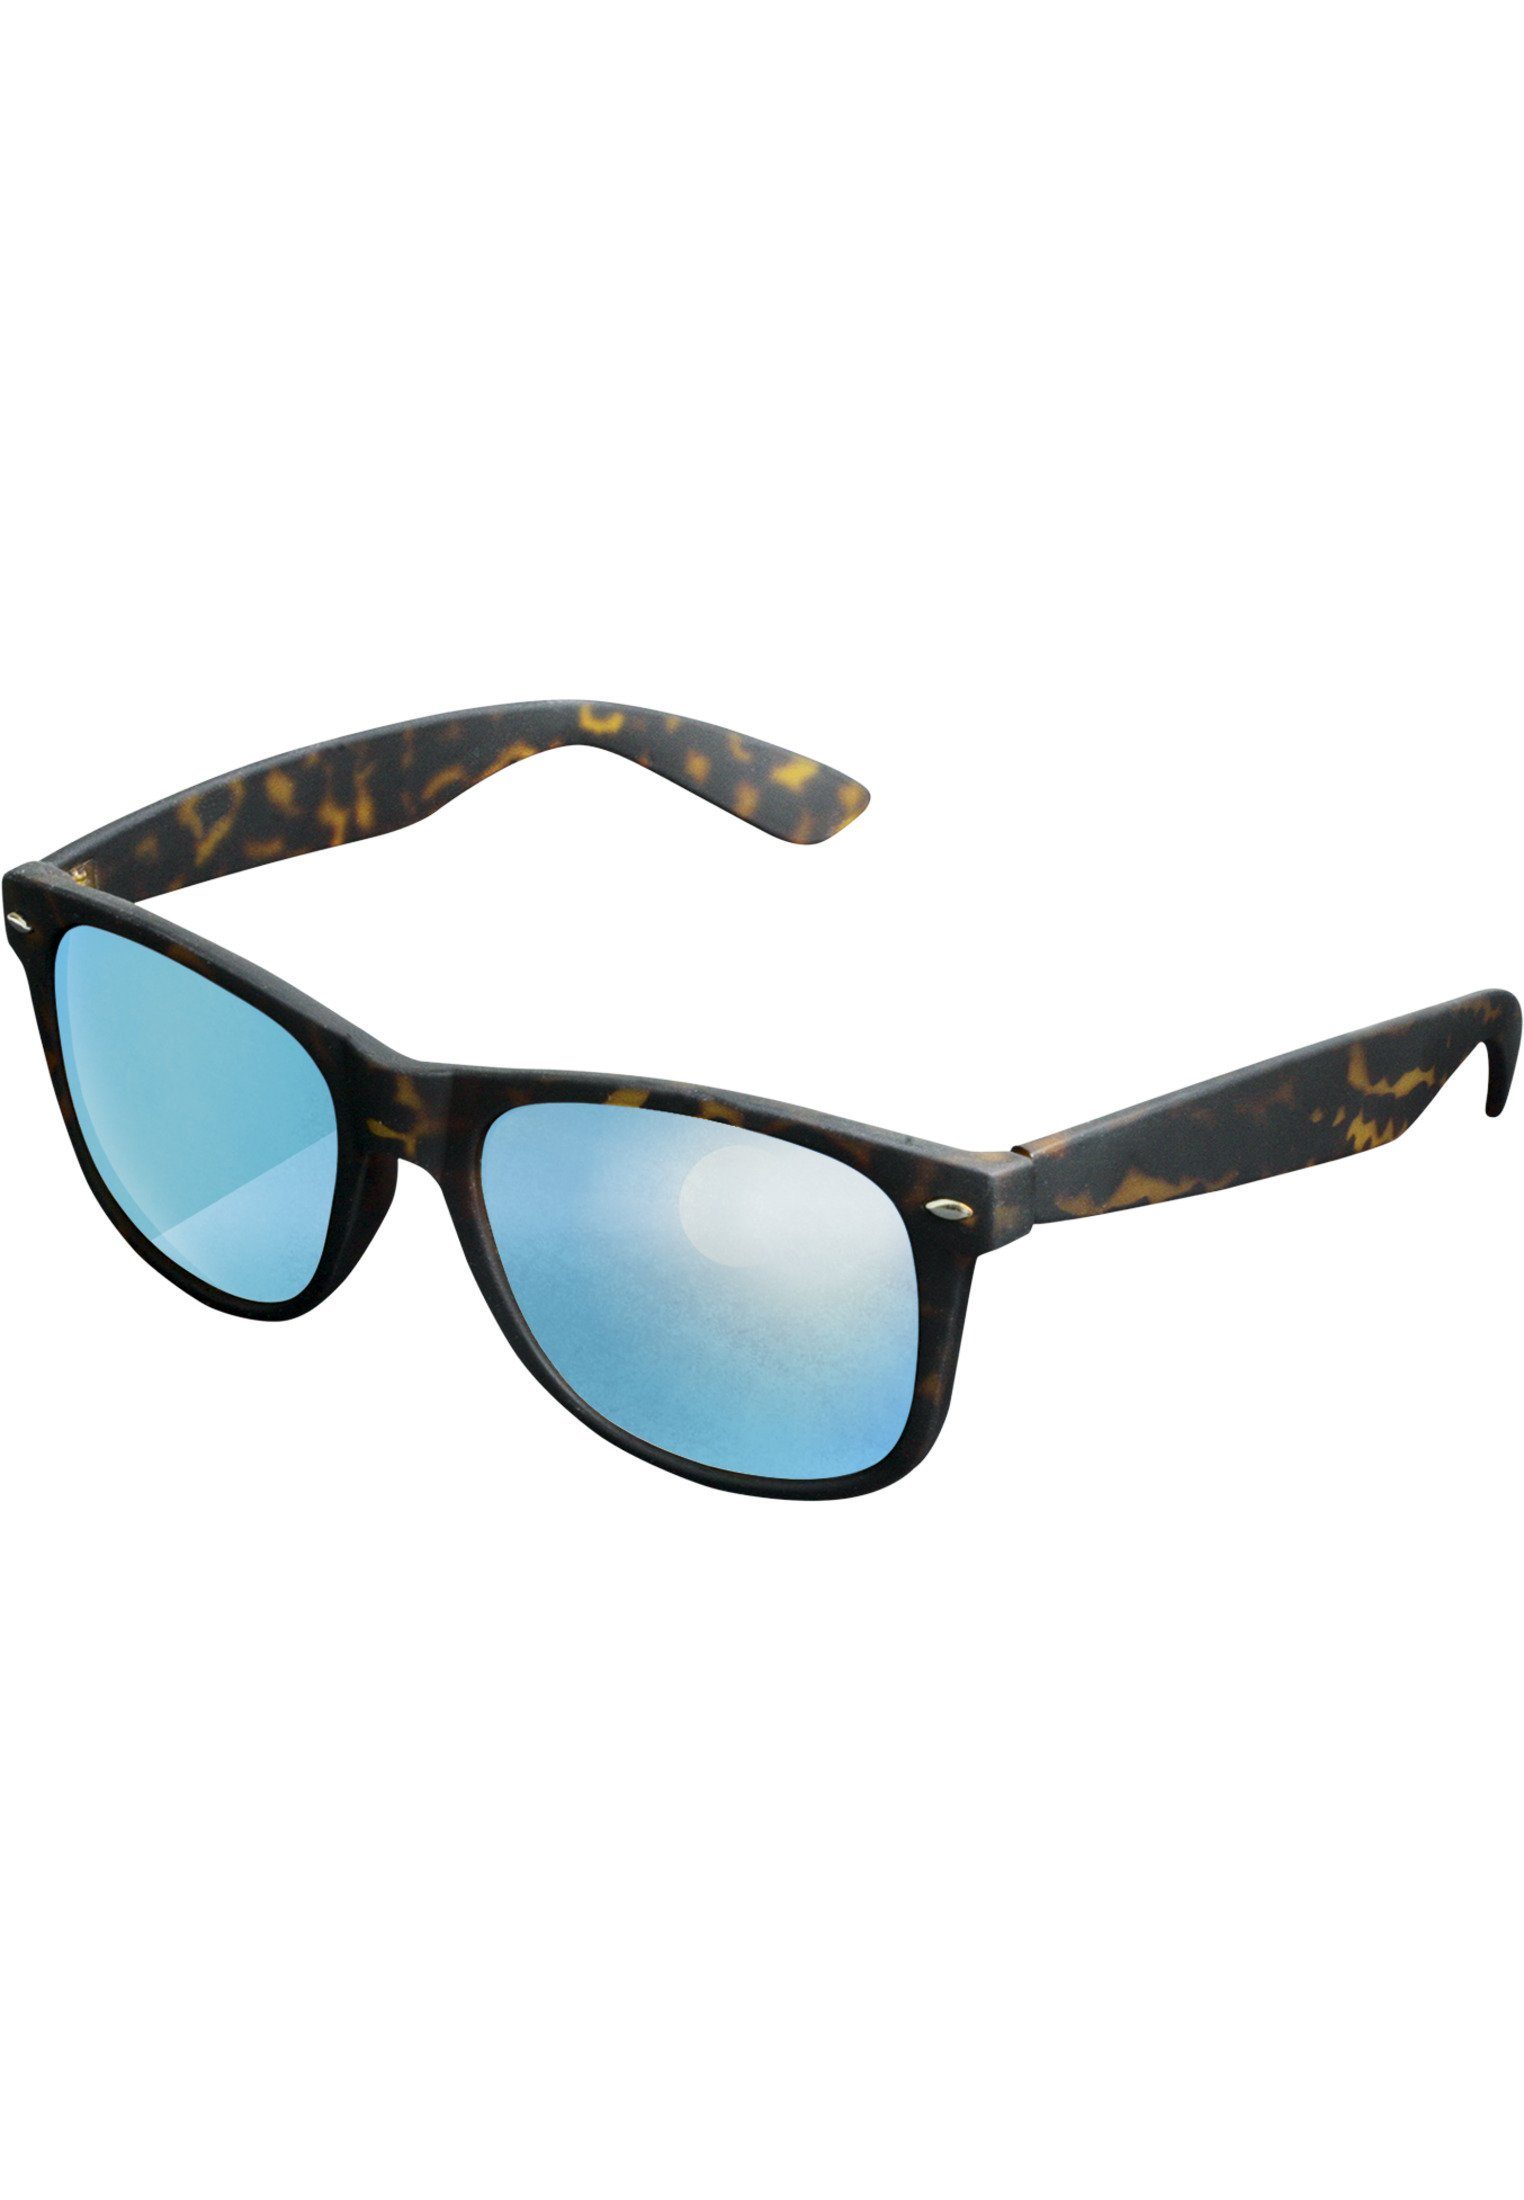 Sunglasses Sonnenbrille Likoma MSTRDS amber/blue Accessoires Mirror